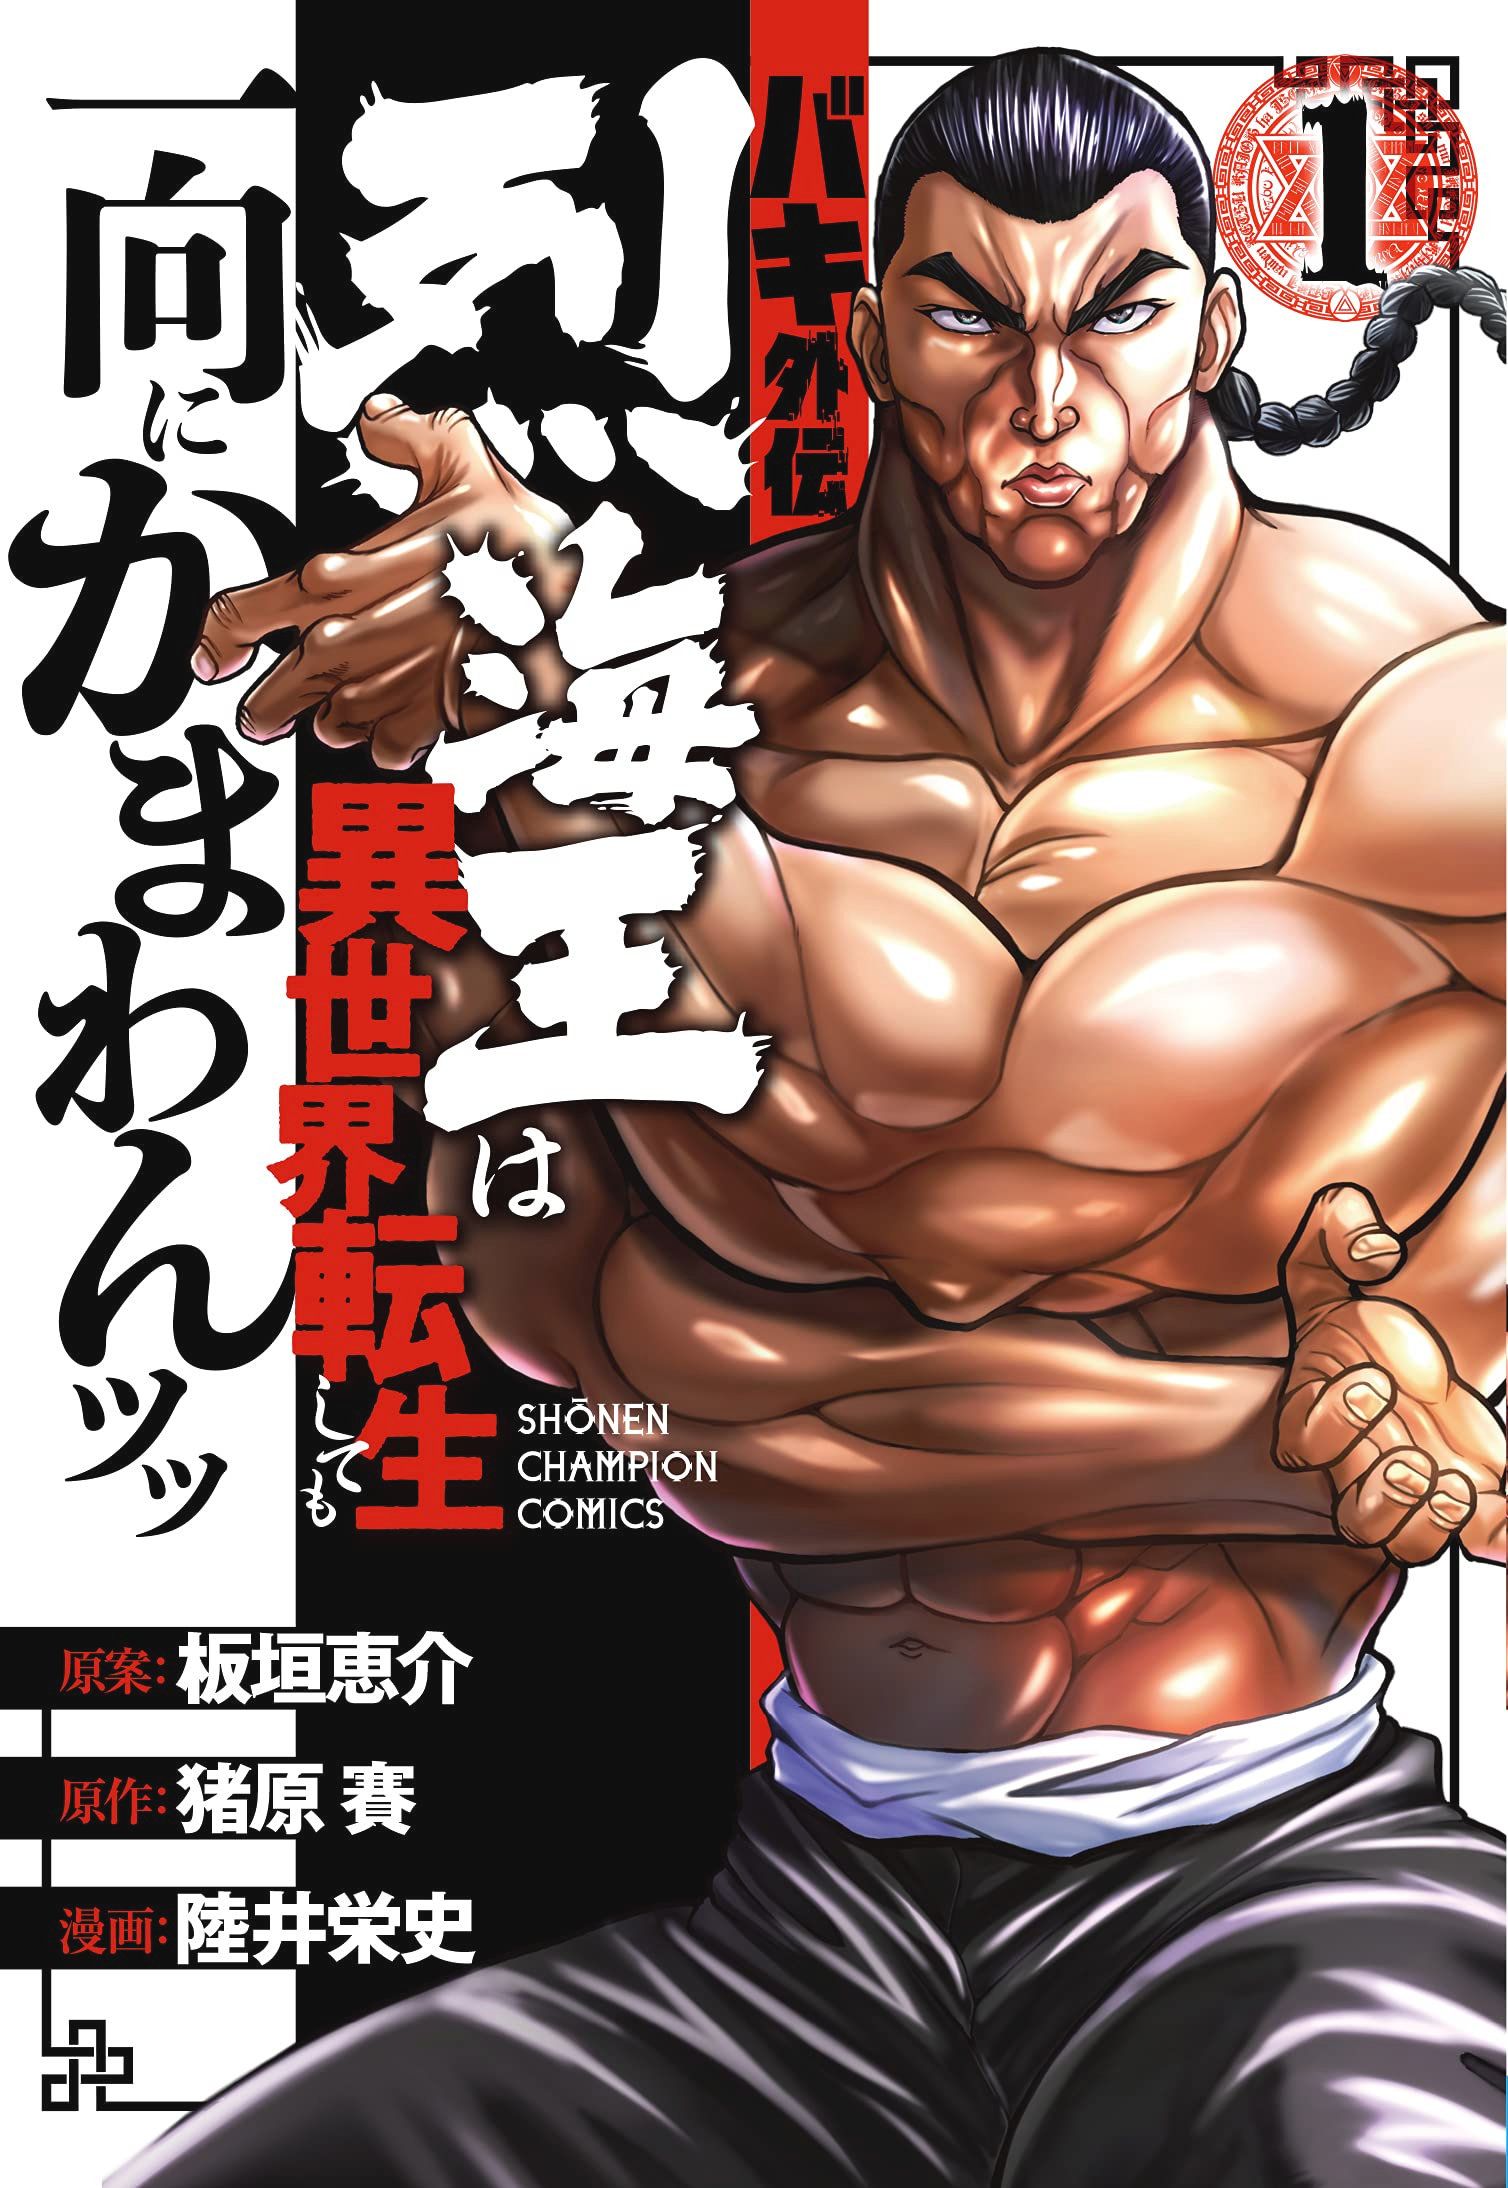 Baki New Manga Series Baki Rahen Manga Cover Offic by weebutee on